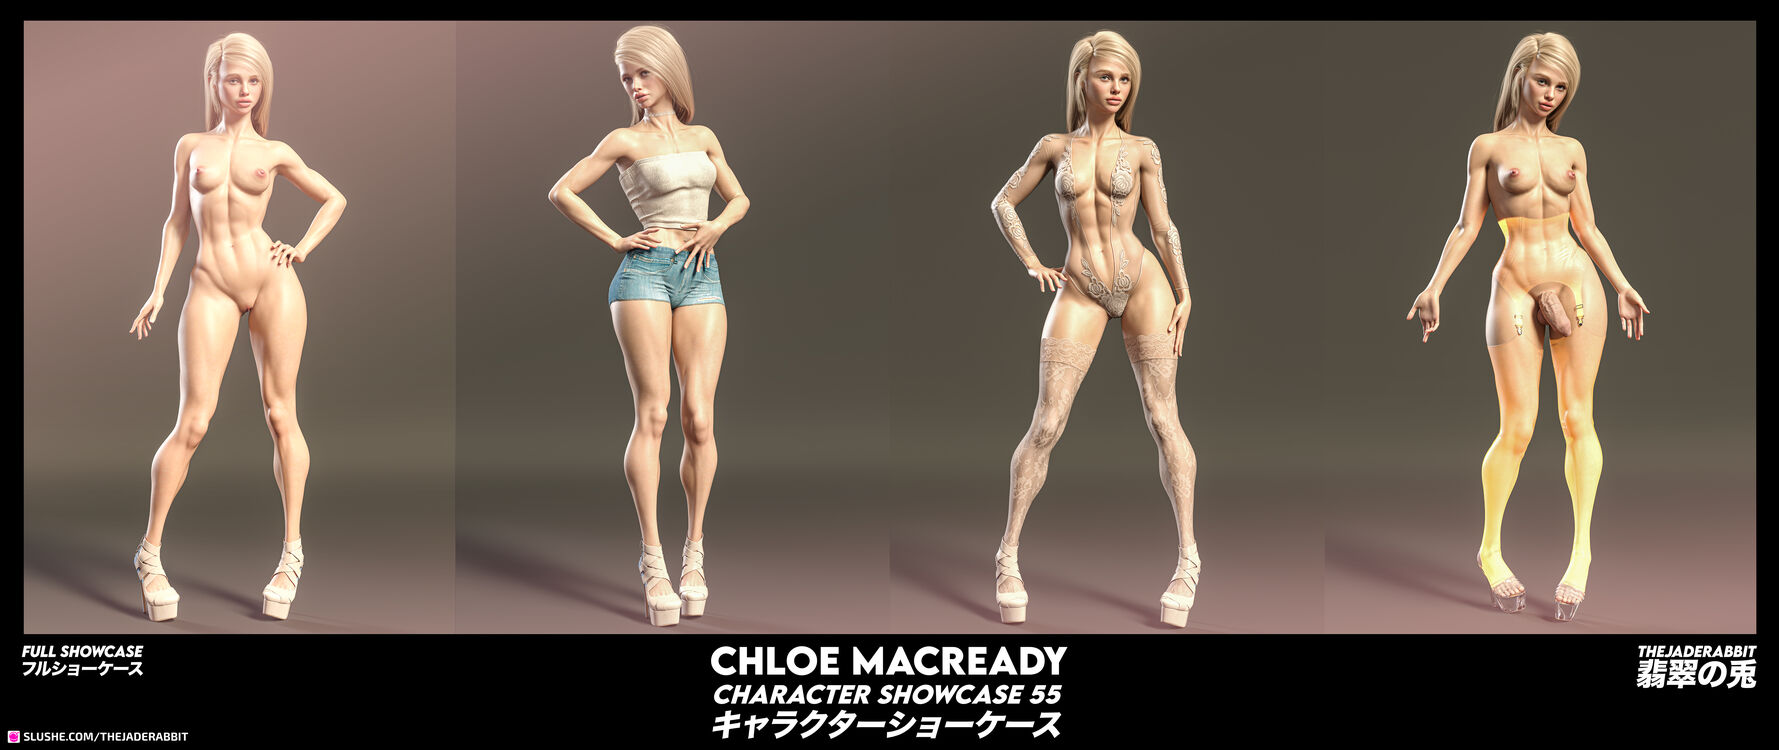 055 Chloe Macready - Full Showcase